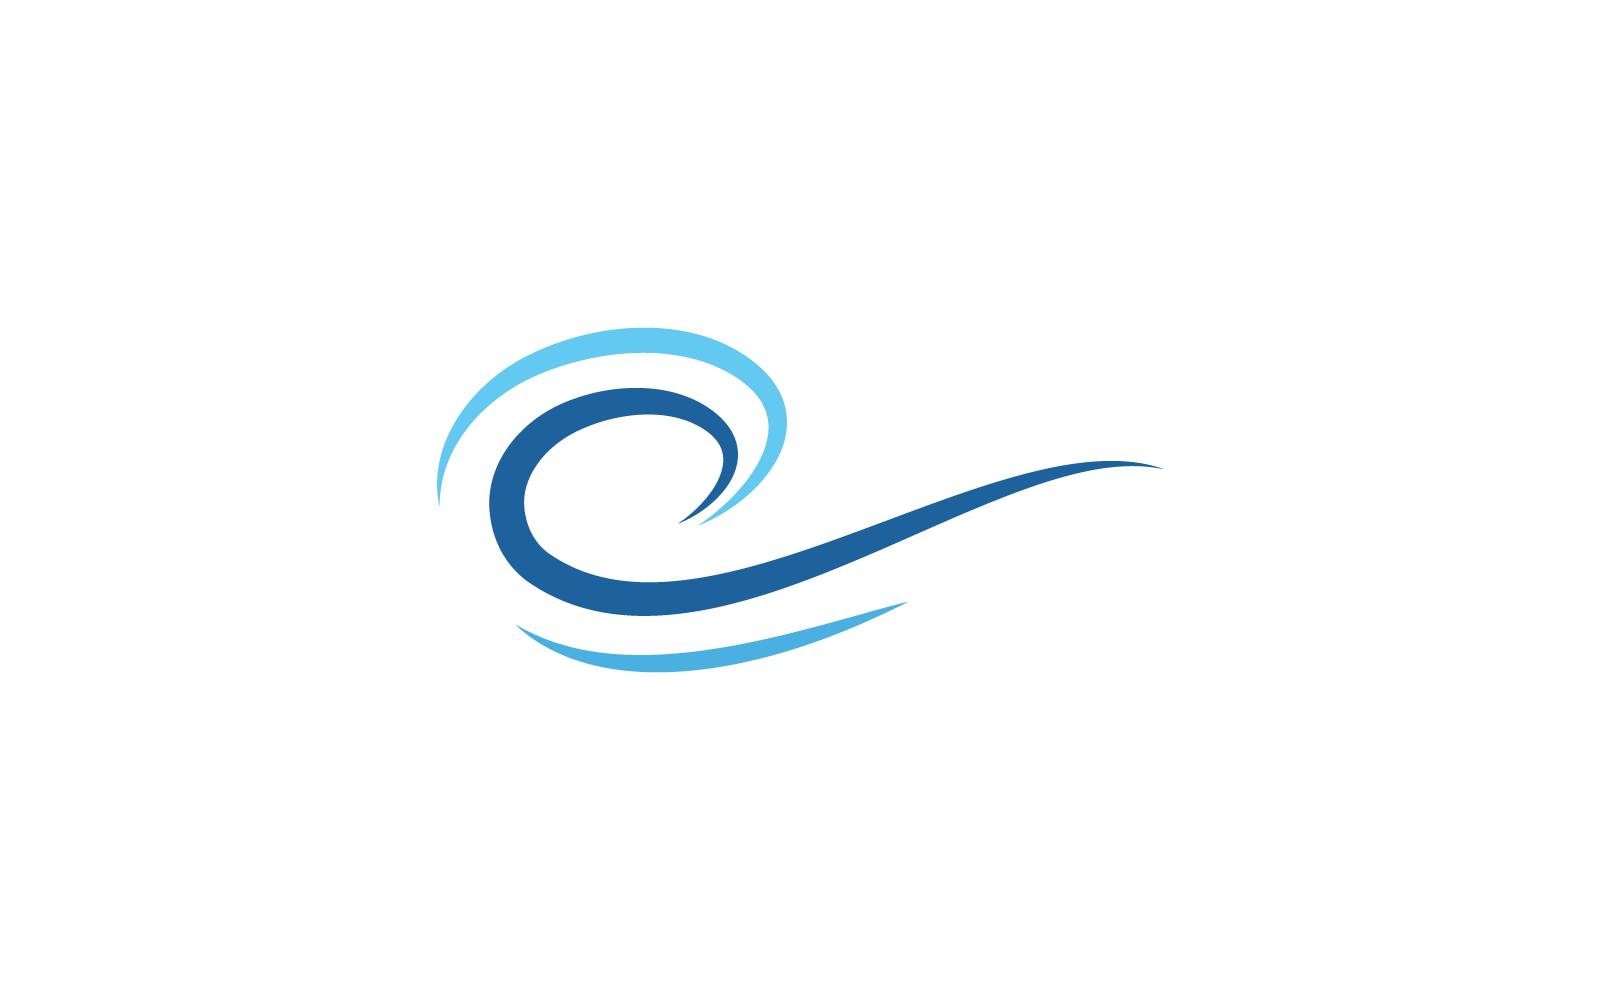 Шаблон логотипа Water Wave, векторный плоский дизайн